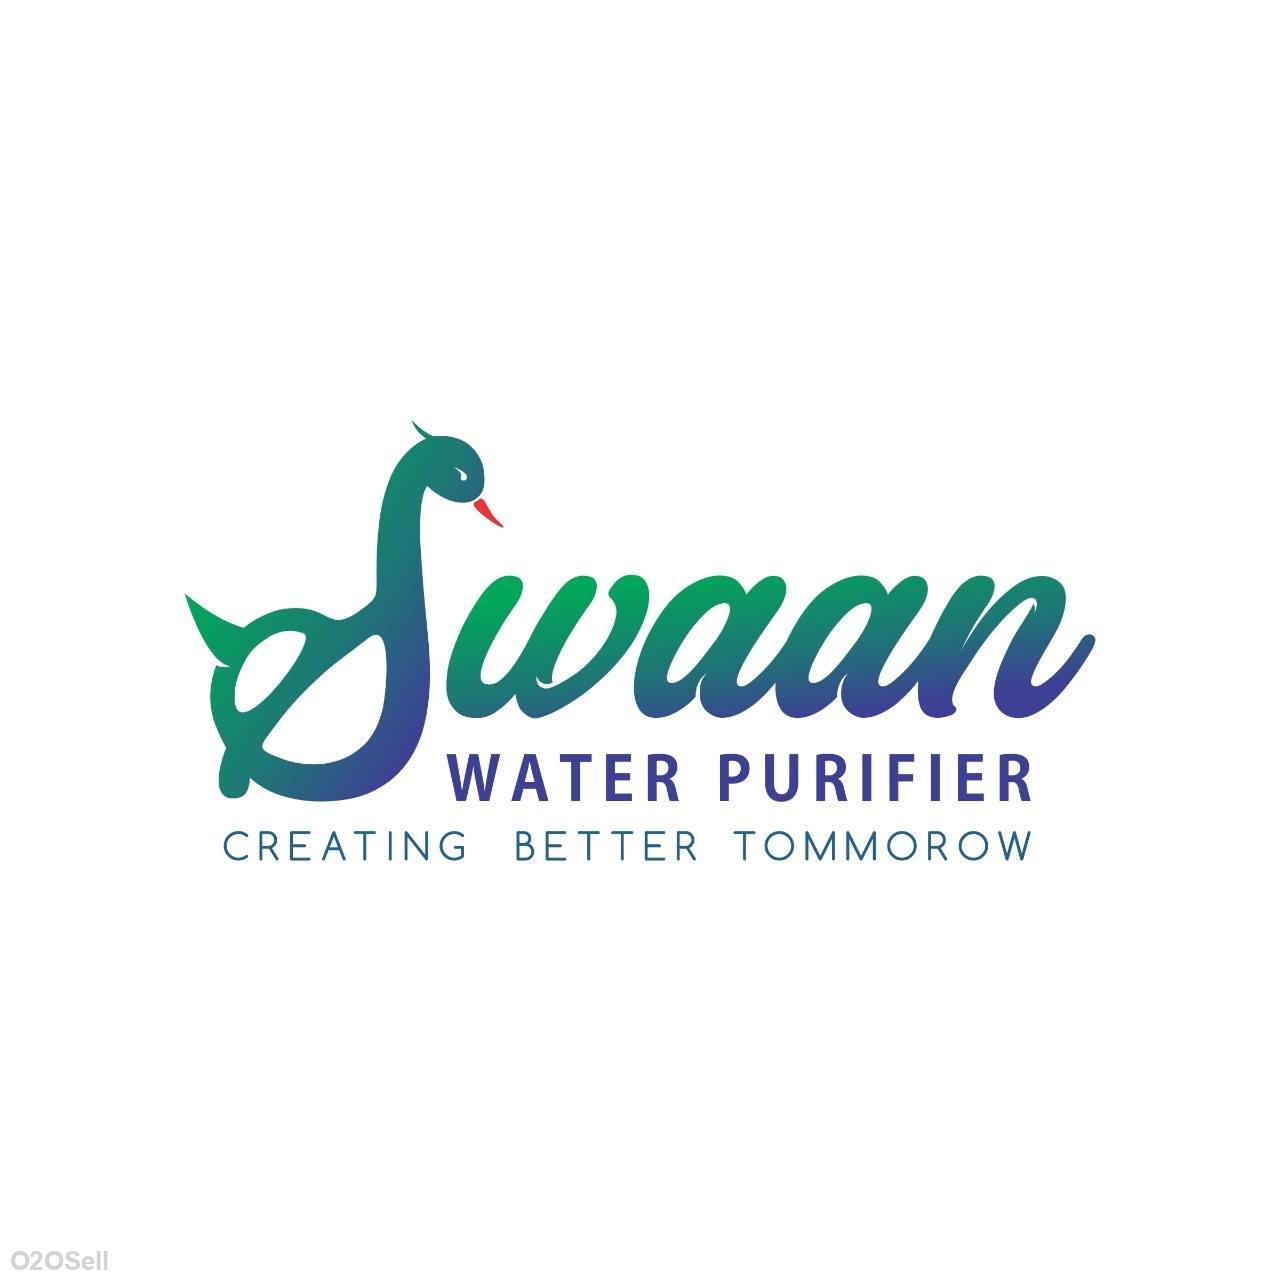 Swaan R O Water Purifier - Profile Image